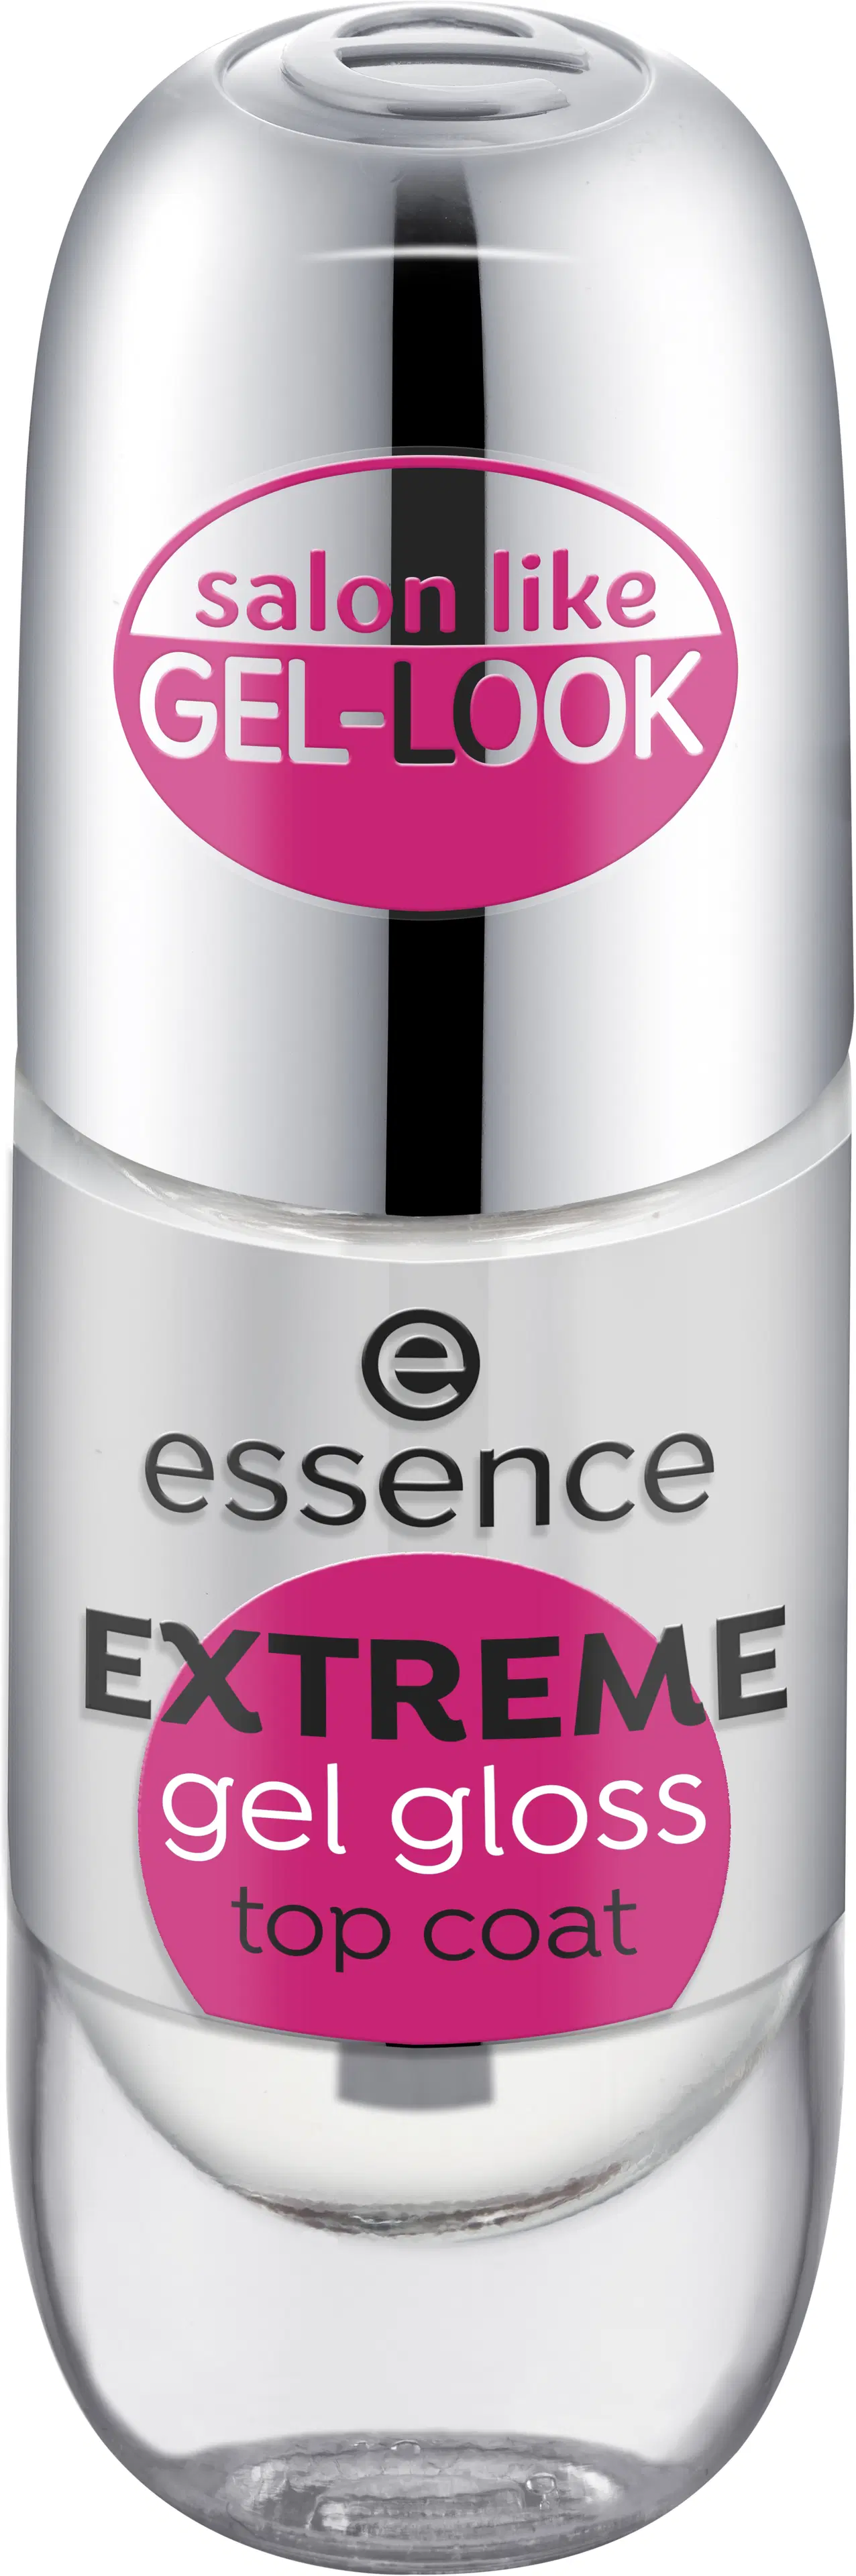 essence EXTREME gel gloss top coat päällyslakka 8 ml